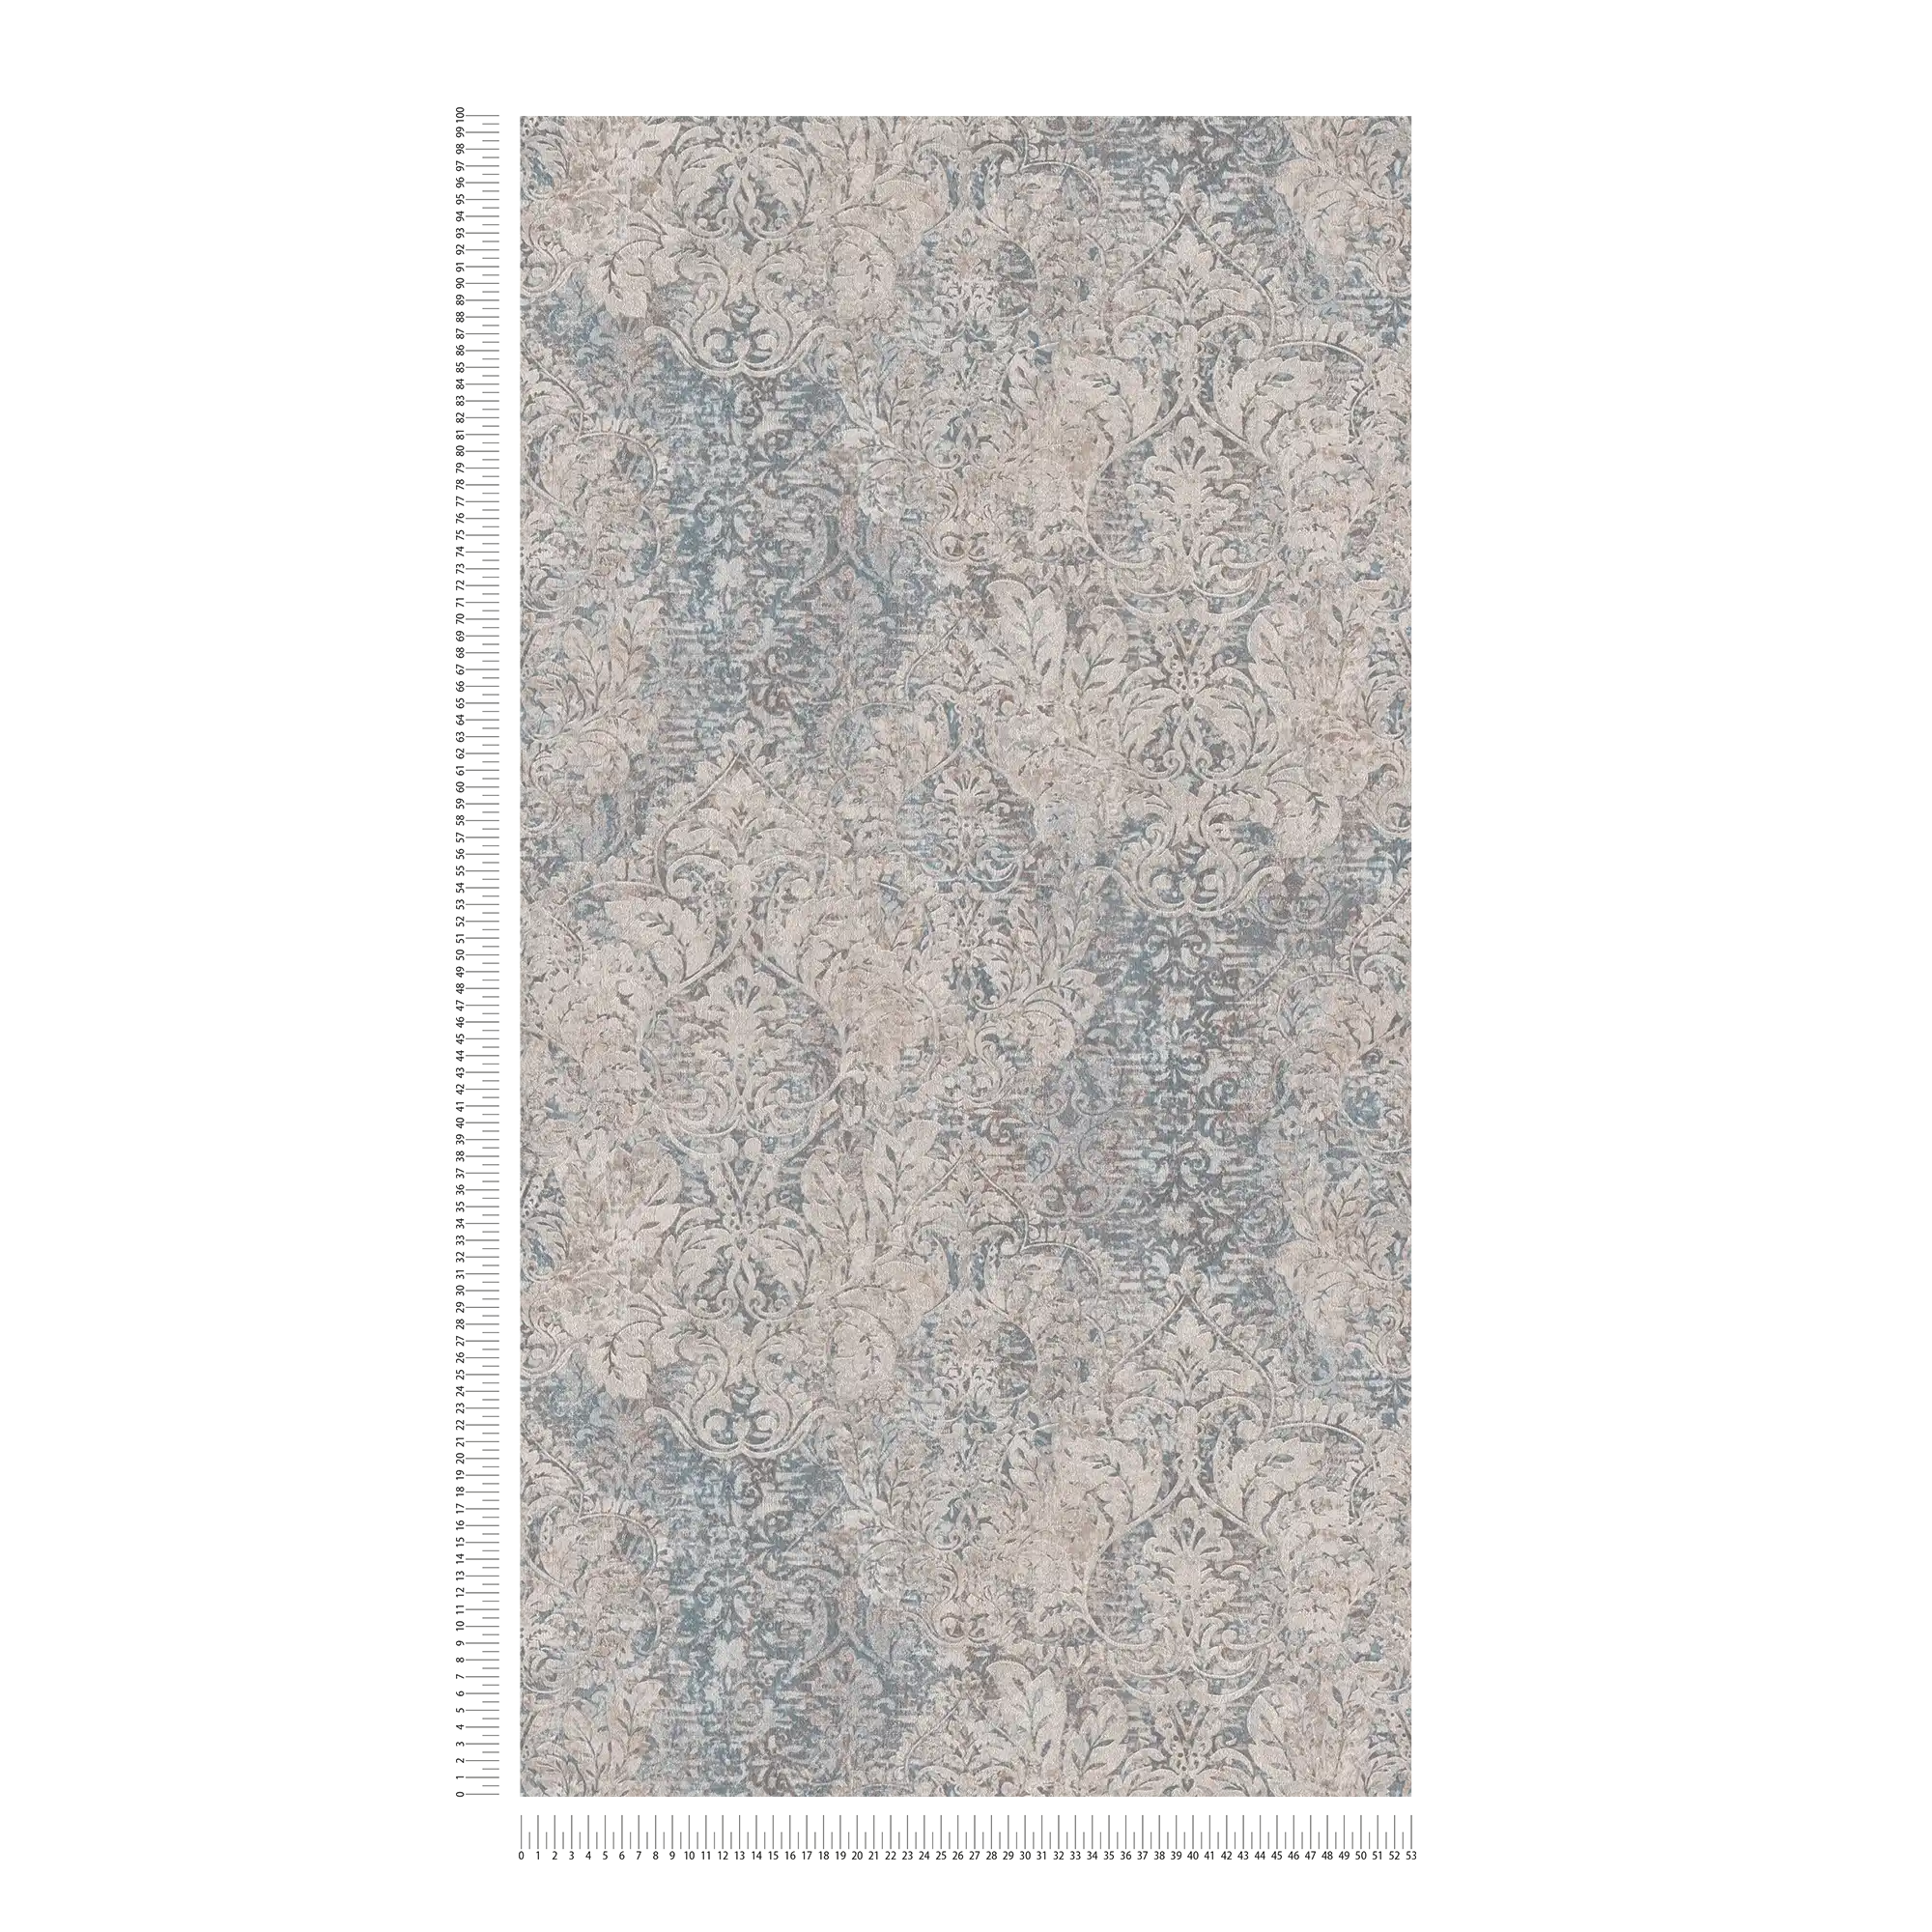             Ornament Tapete Used im floralen Vintage Stil – Beige, Blau
        